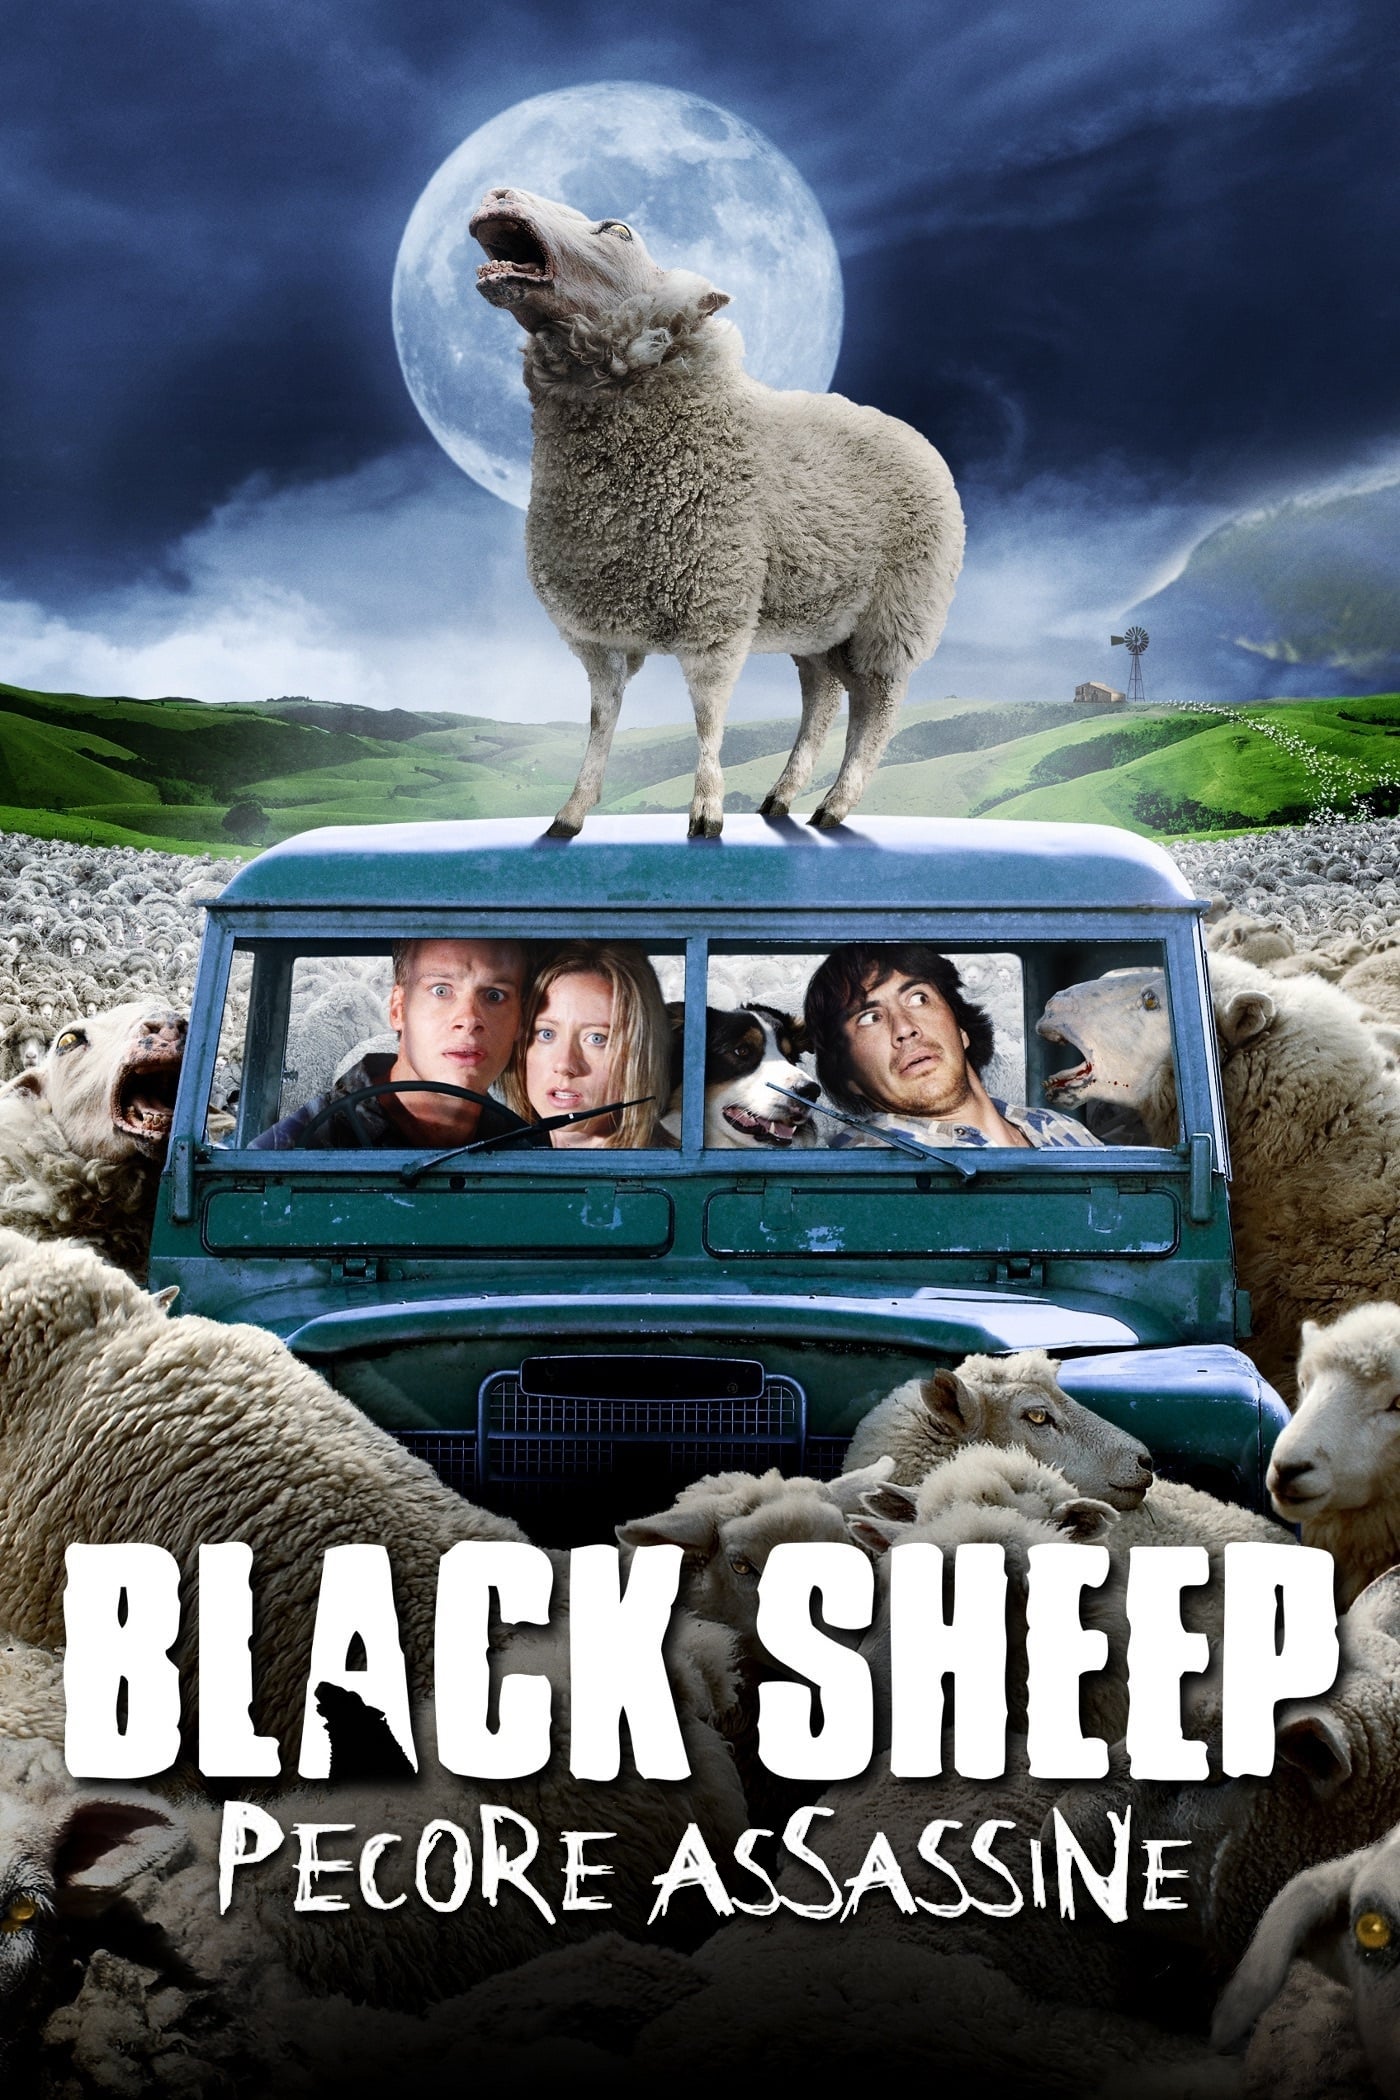 Black Sheep – Pecore assassine [HD] (2008)